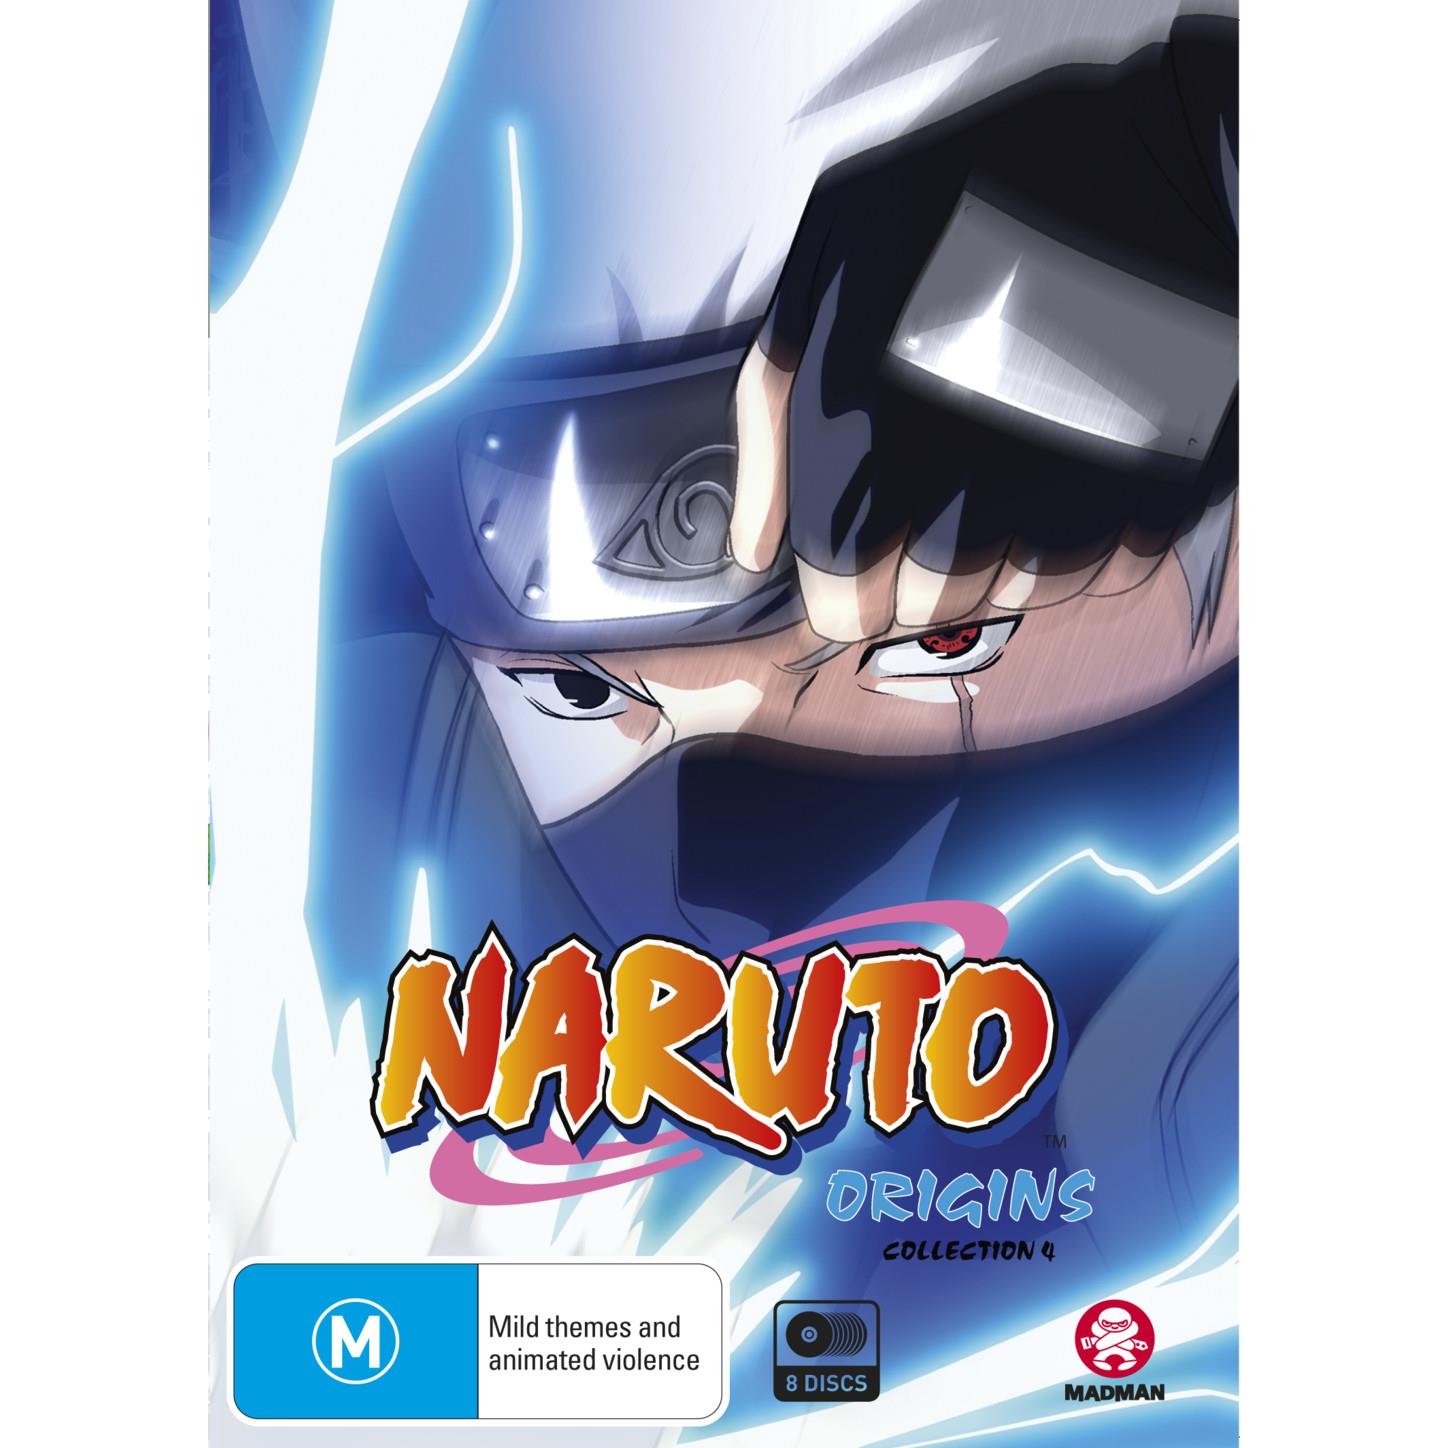 Naruto Shippuden Uncut Set 36 (DVD) : Various: : DVD